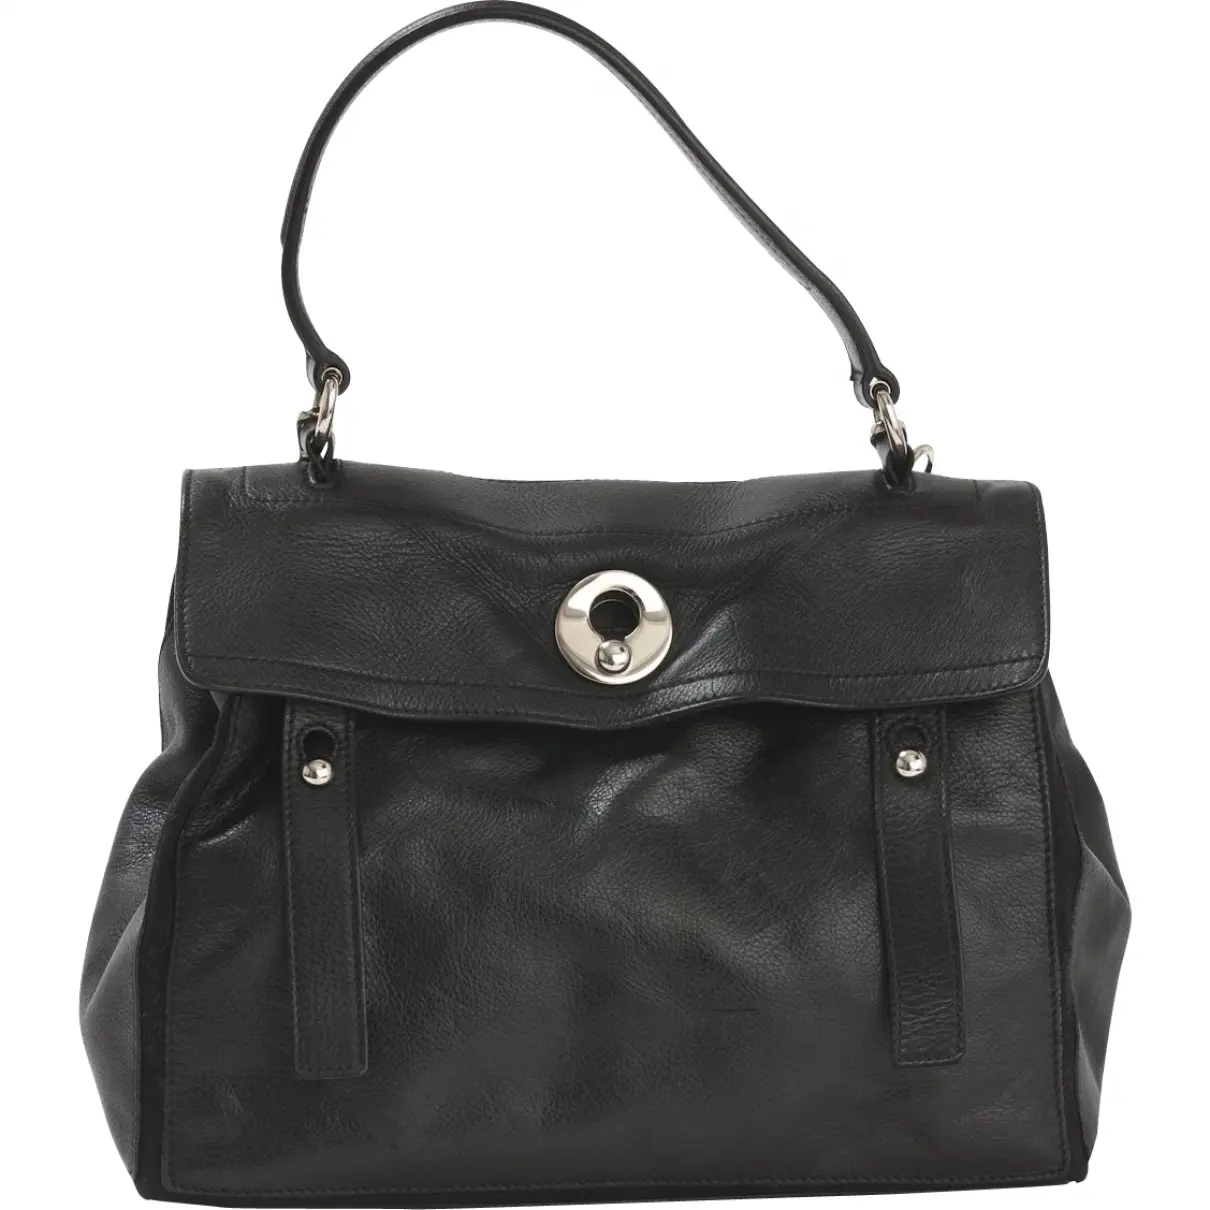 Black Leather Handbag Muse Two Yves Saint Laurent